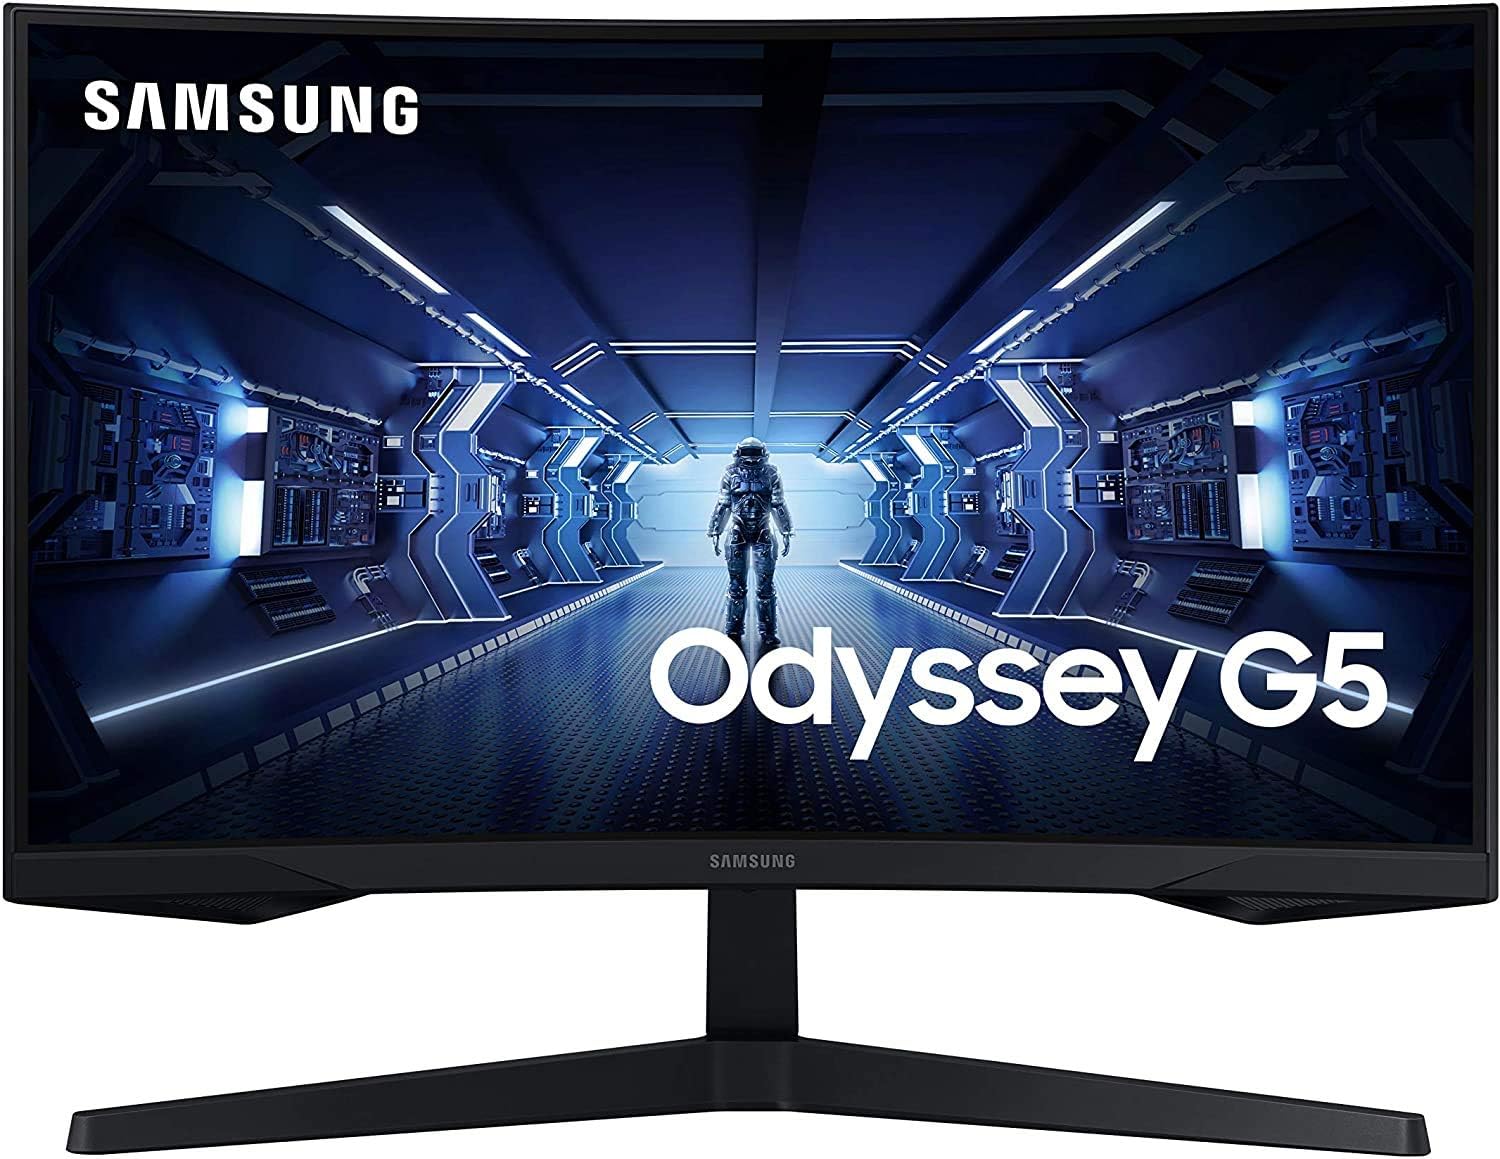 Samsung 27 Inch G5 Odyssey Gaming Monitor - Black